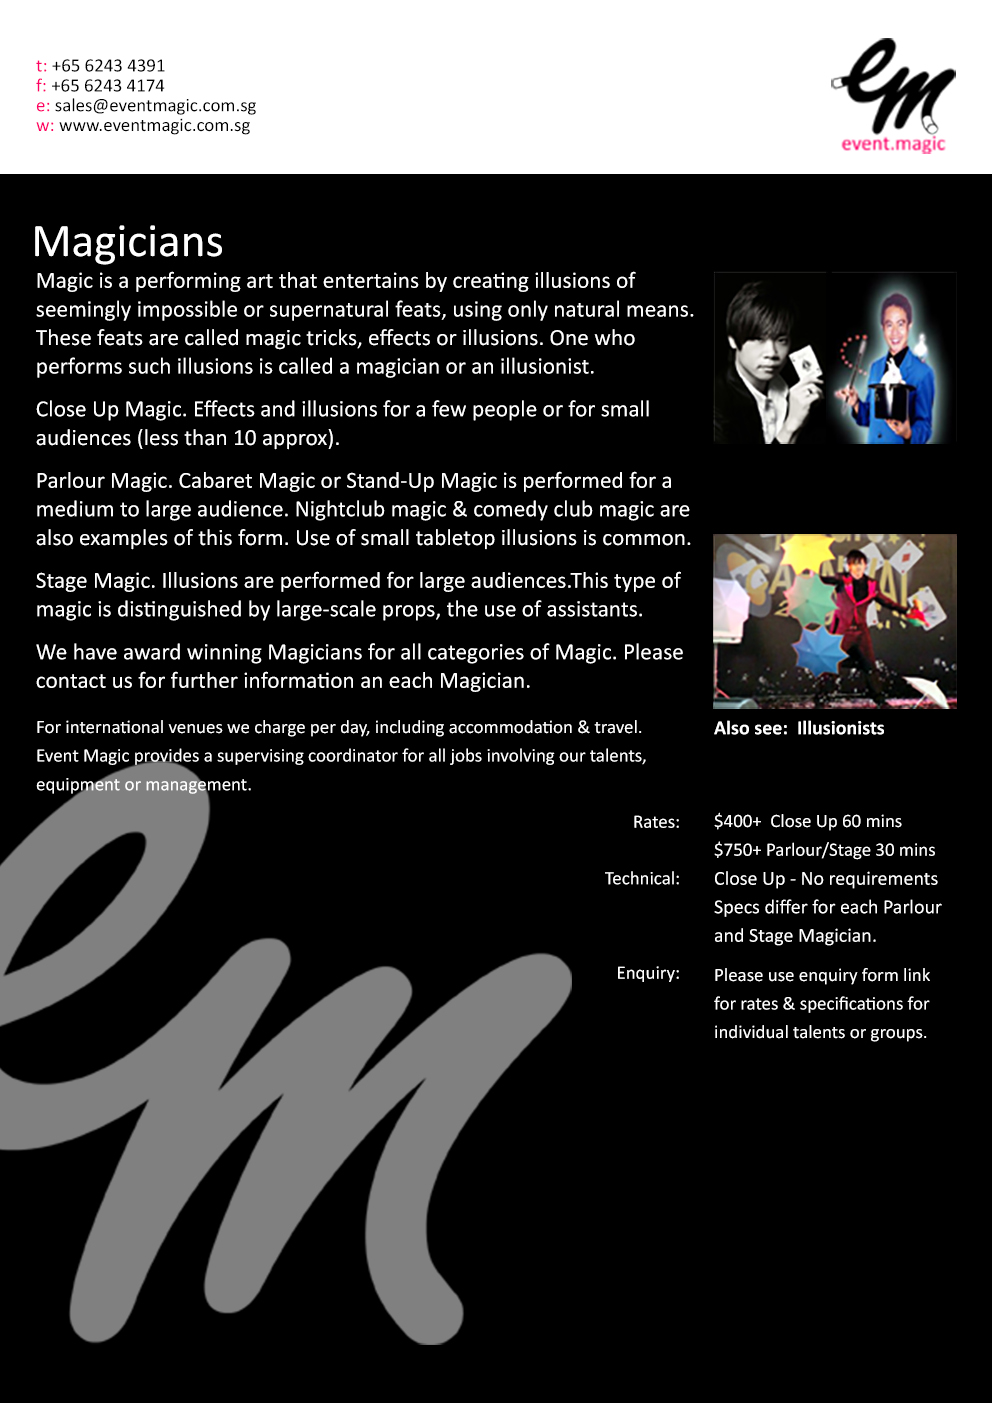 Magic Show Singapore, Magic, Stage magic Show Singapore